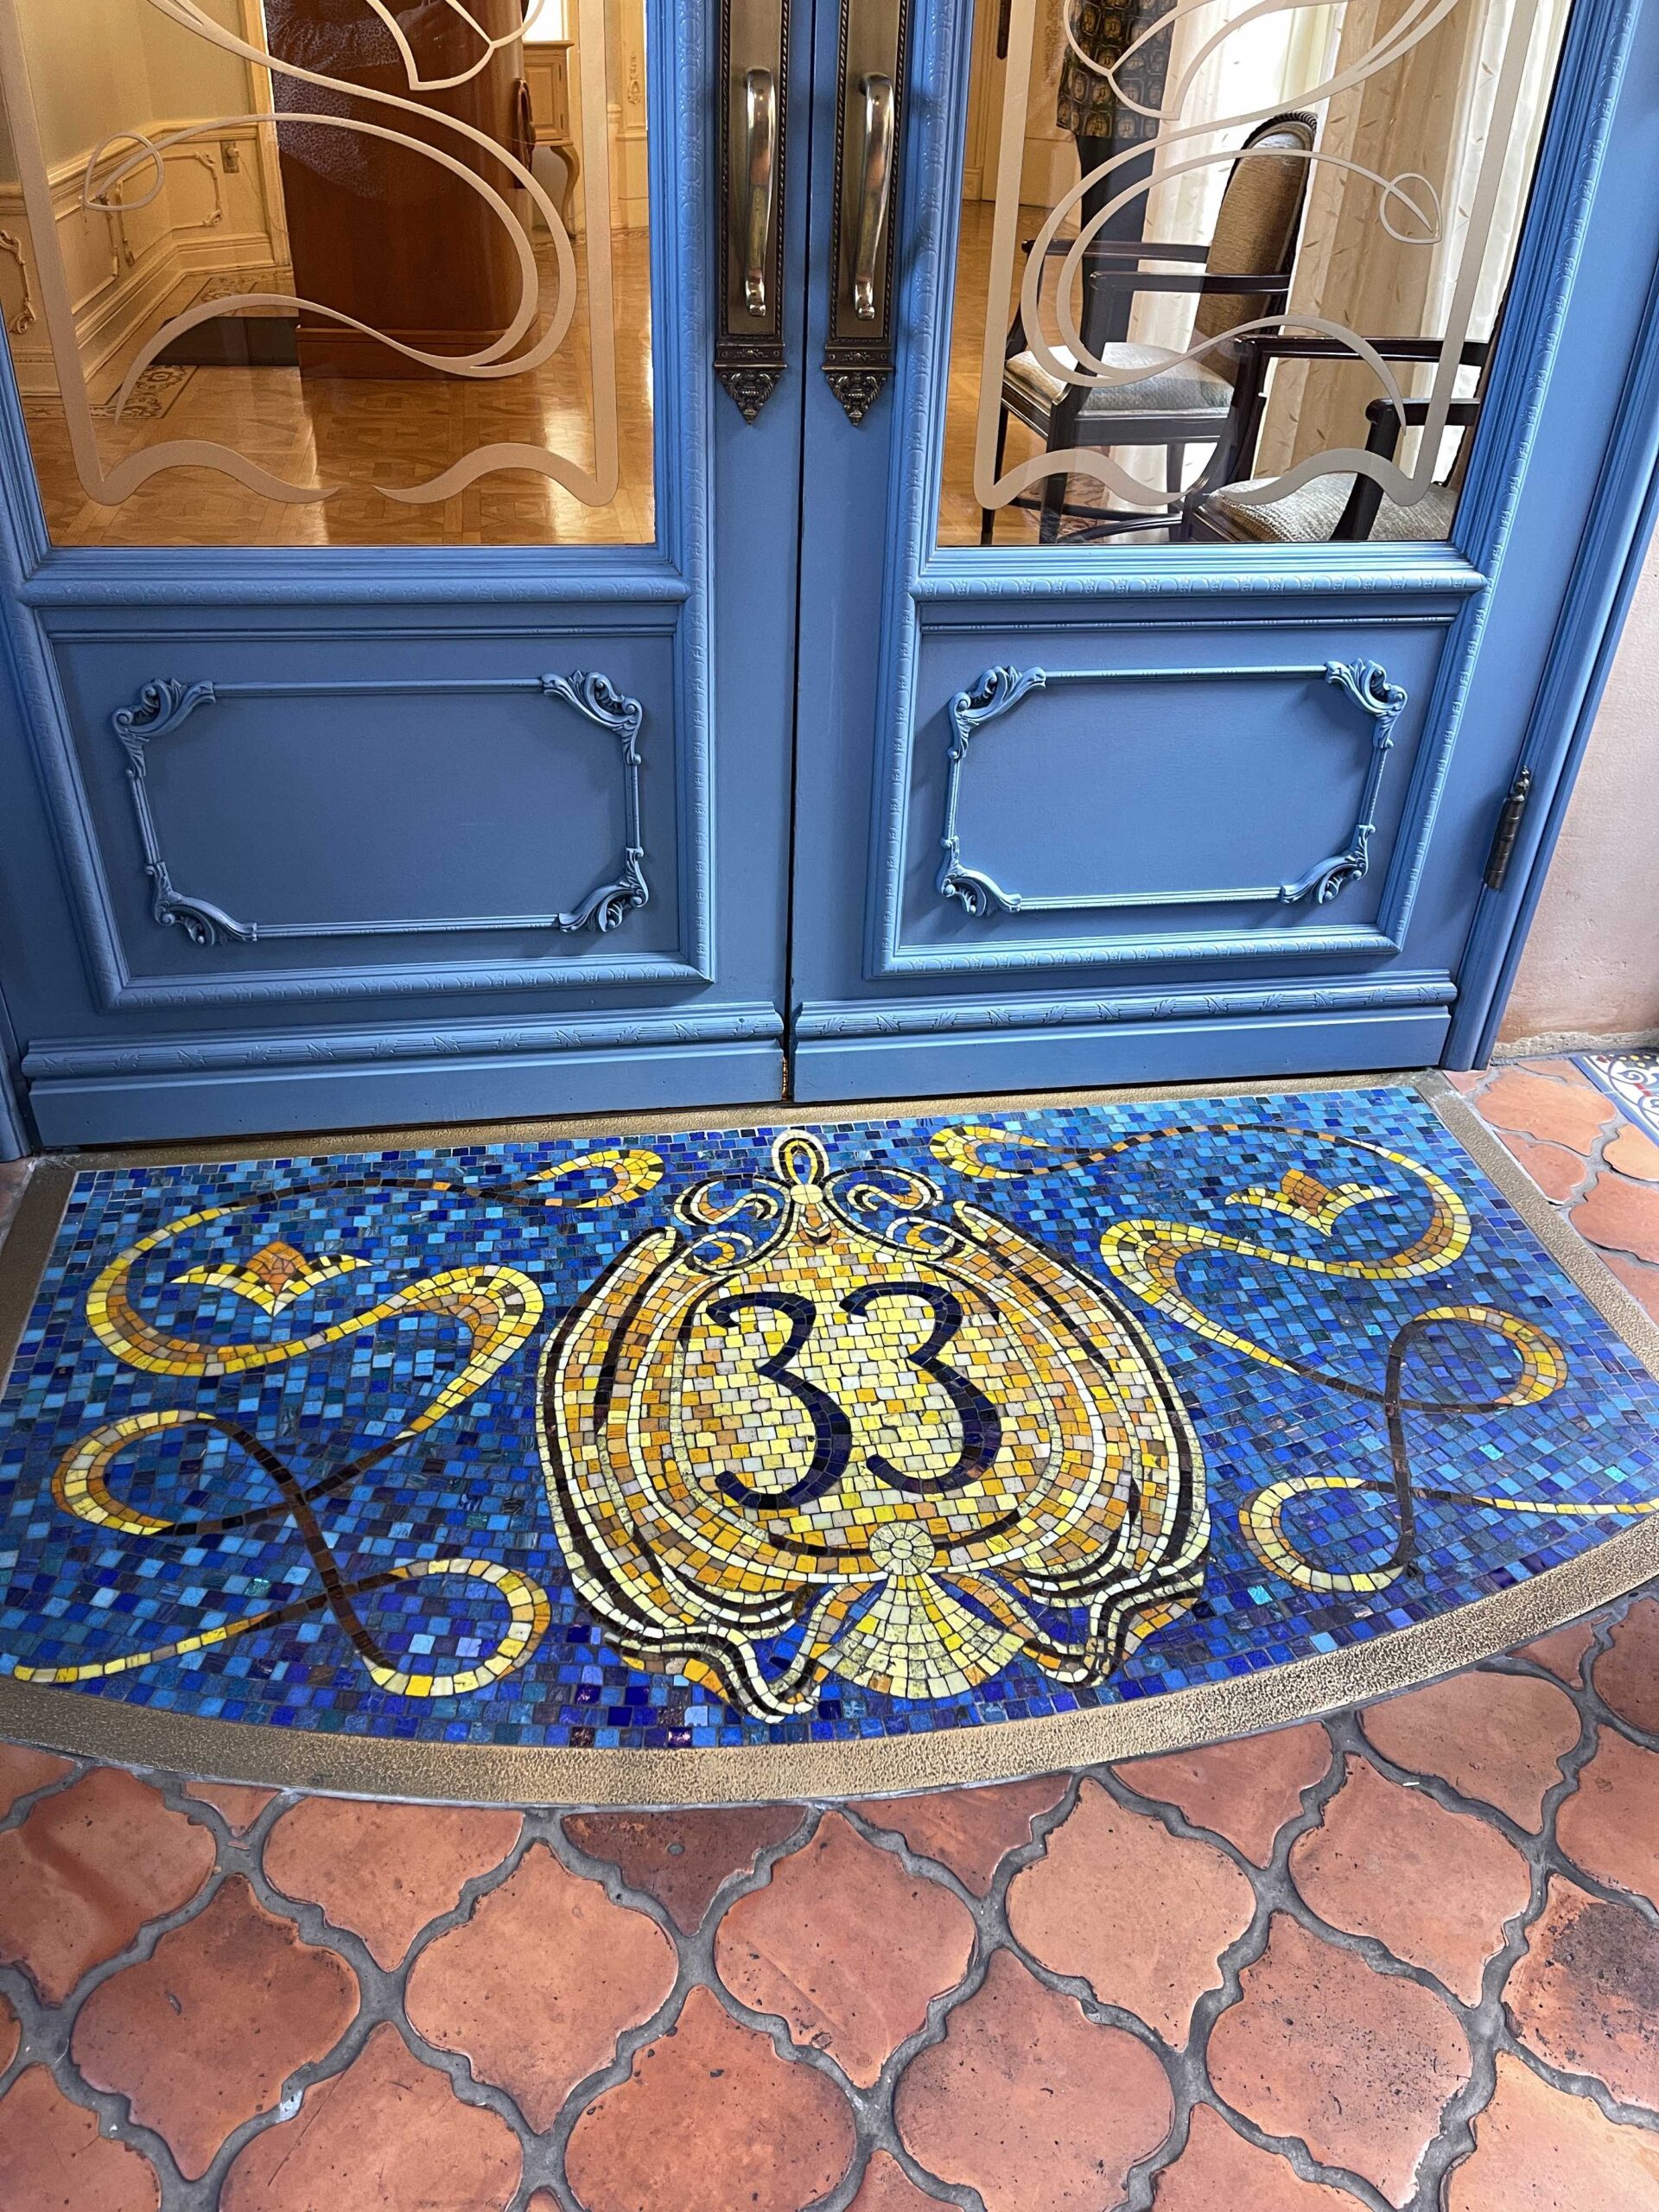 Tiled formal entrance of Club 33.